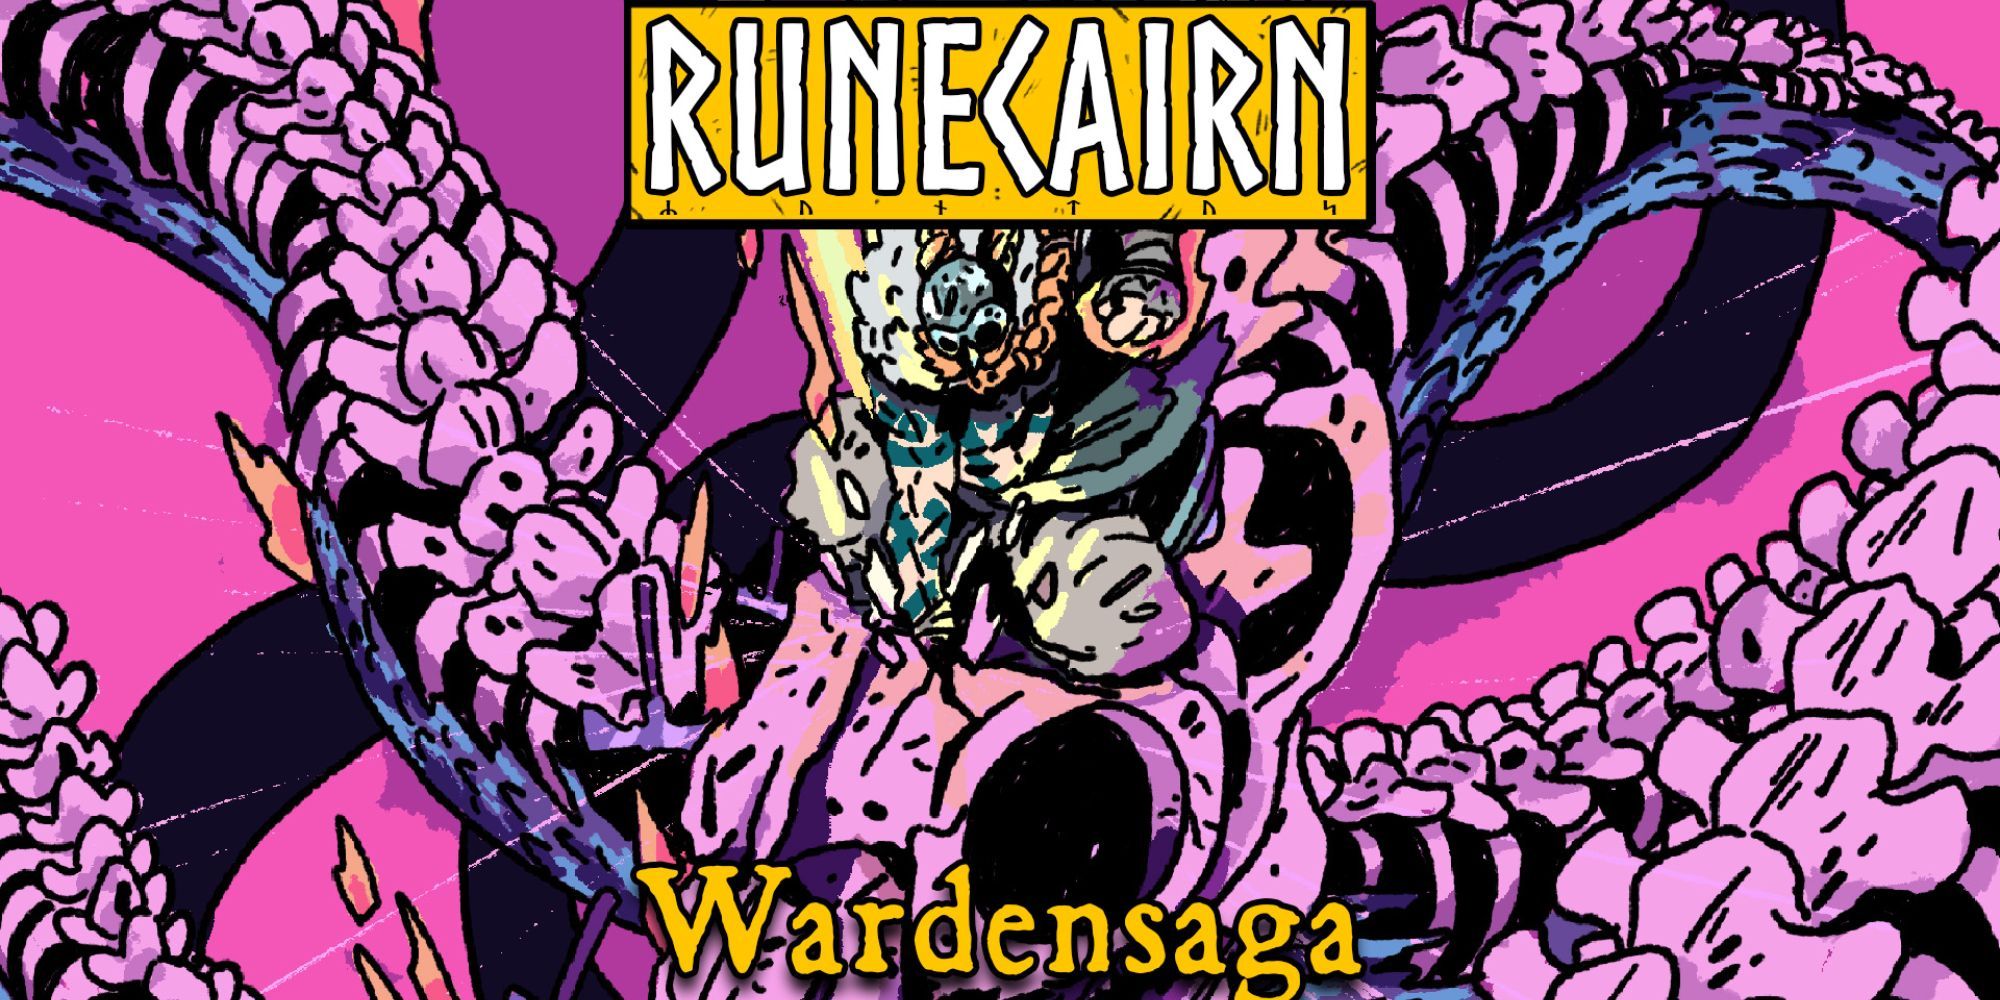 RuneCairn Wardensage Cover Art